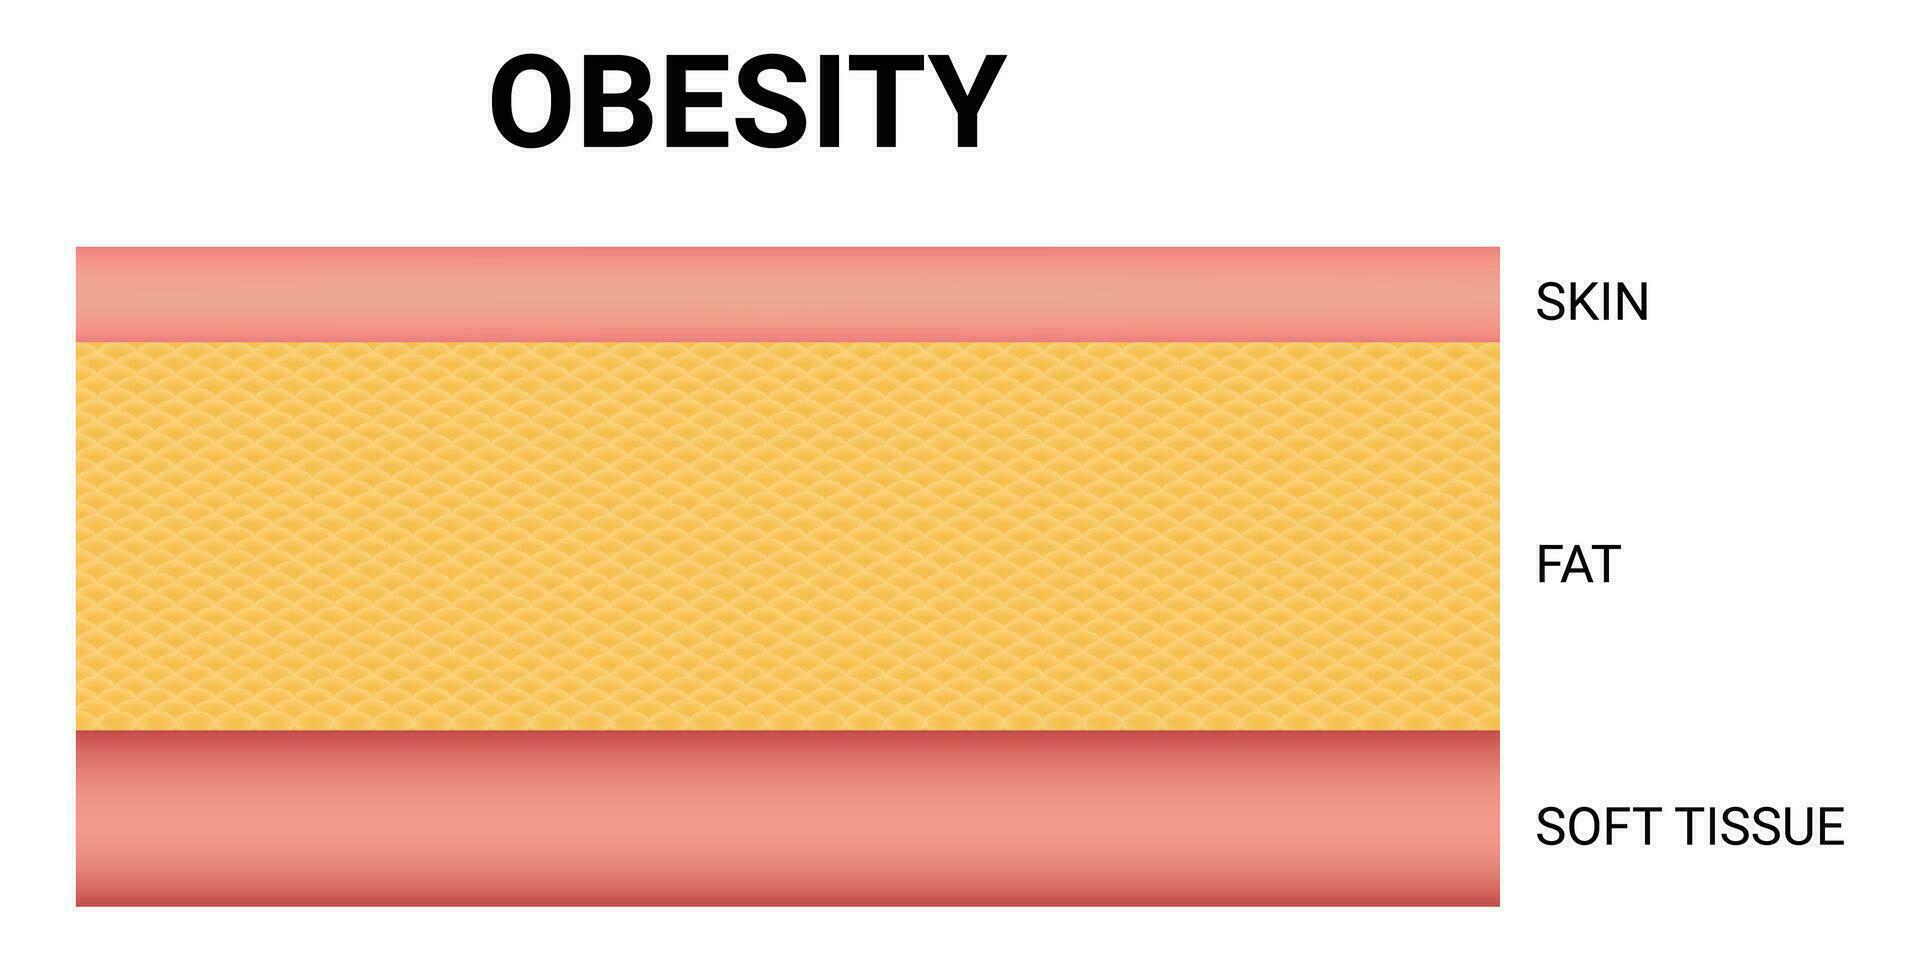 Obesity Science Design Vector Illustration